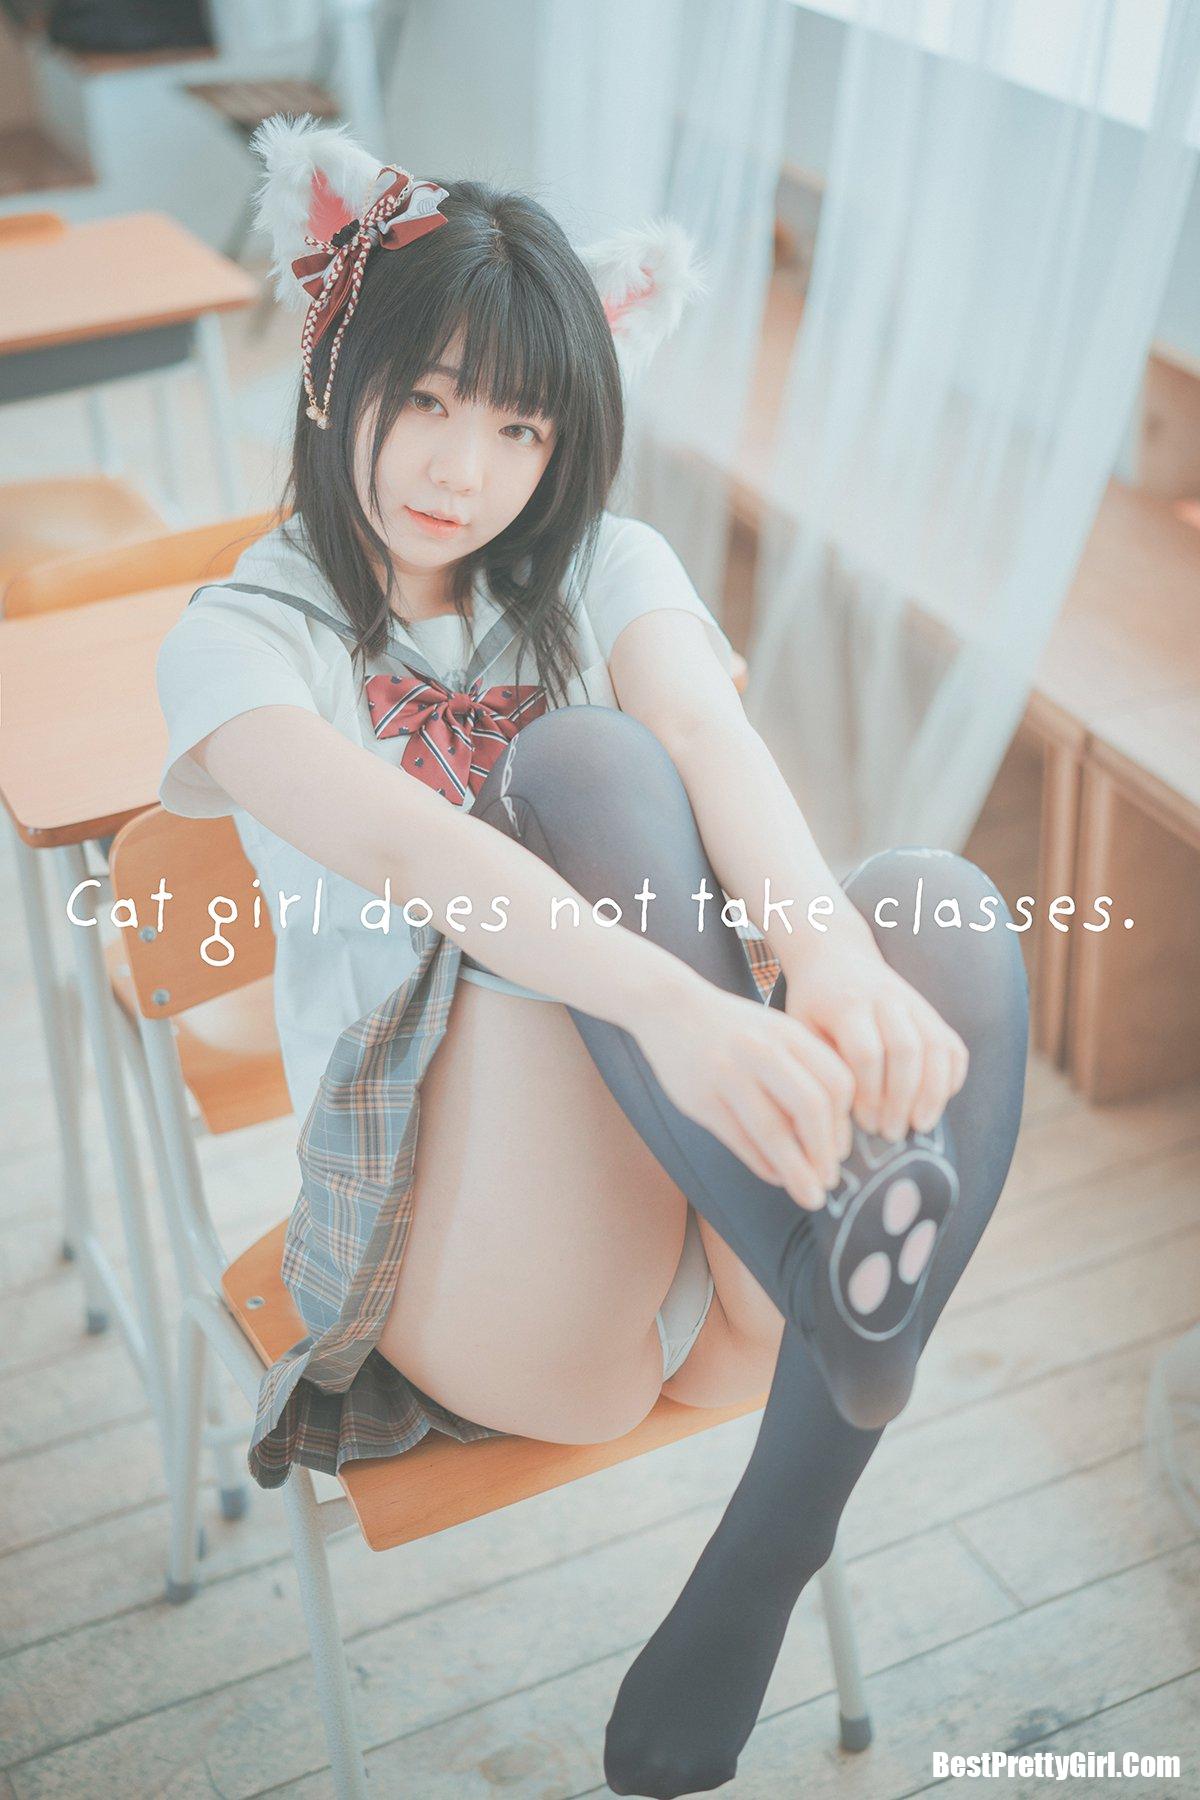 DJAWA 피안화 Cat girl does not take classes 0